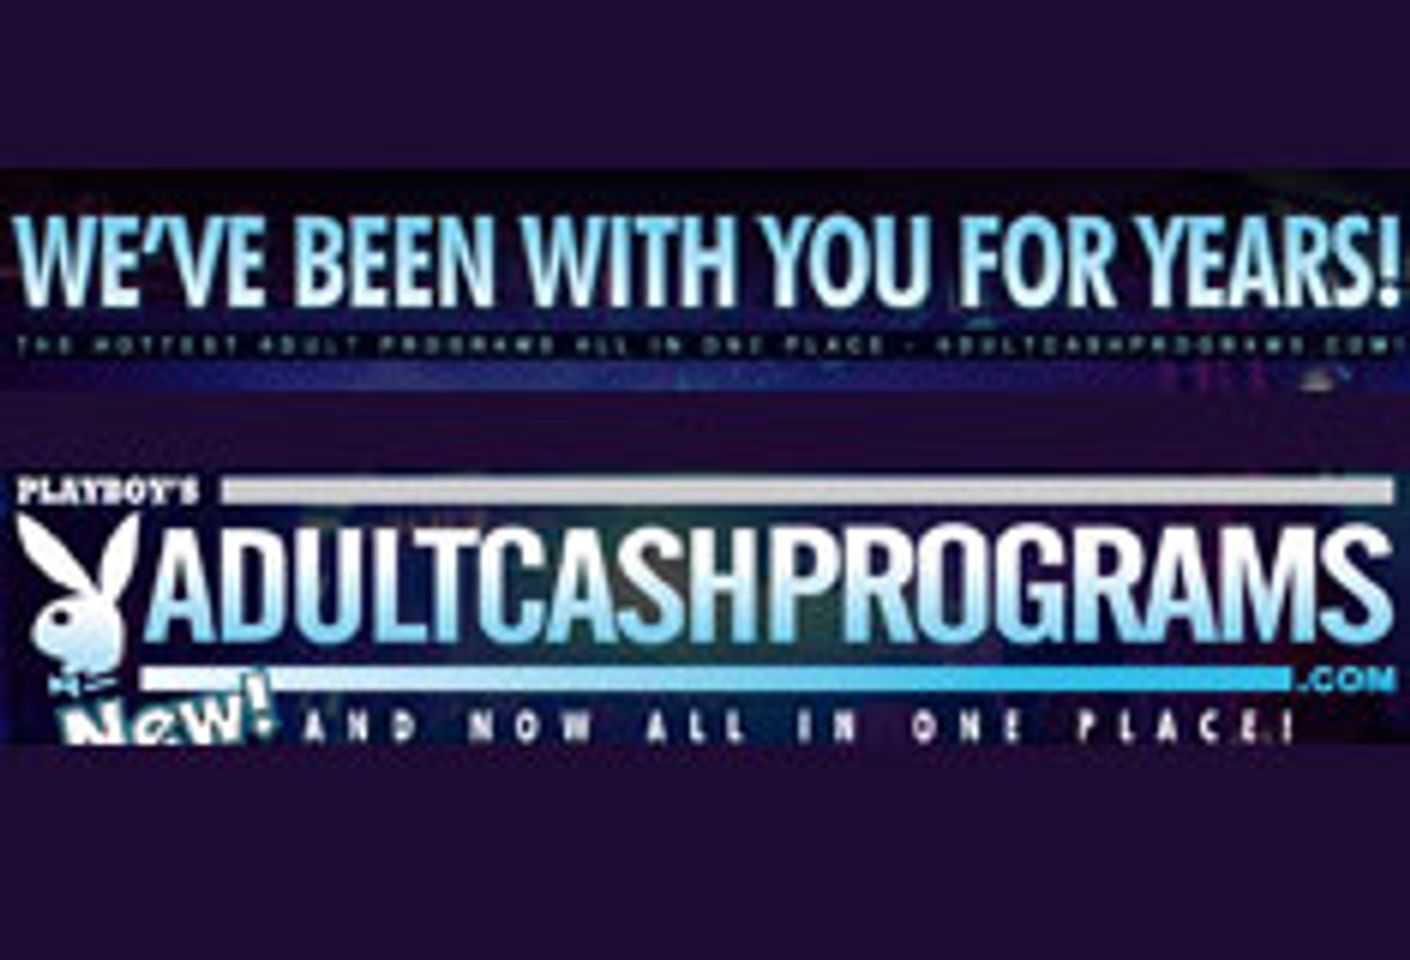 AdultCashPrograms Offers November Blowout Promo